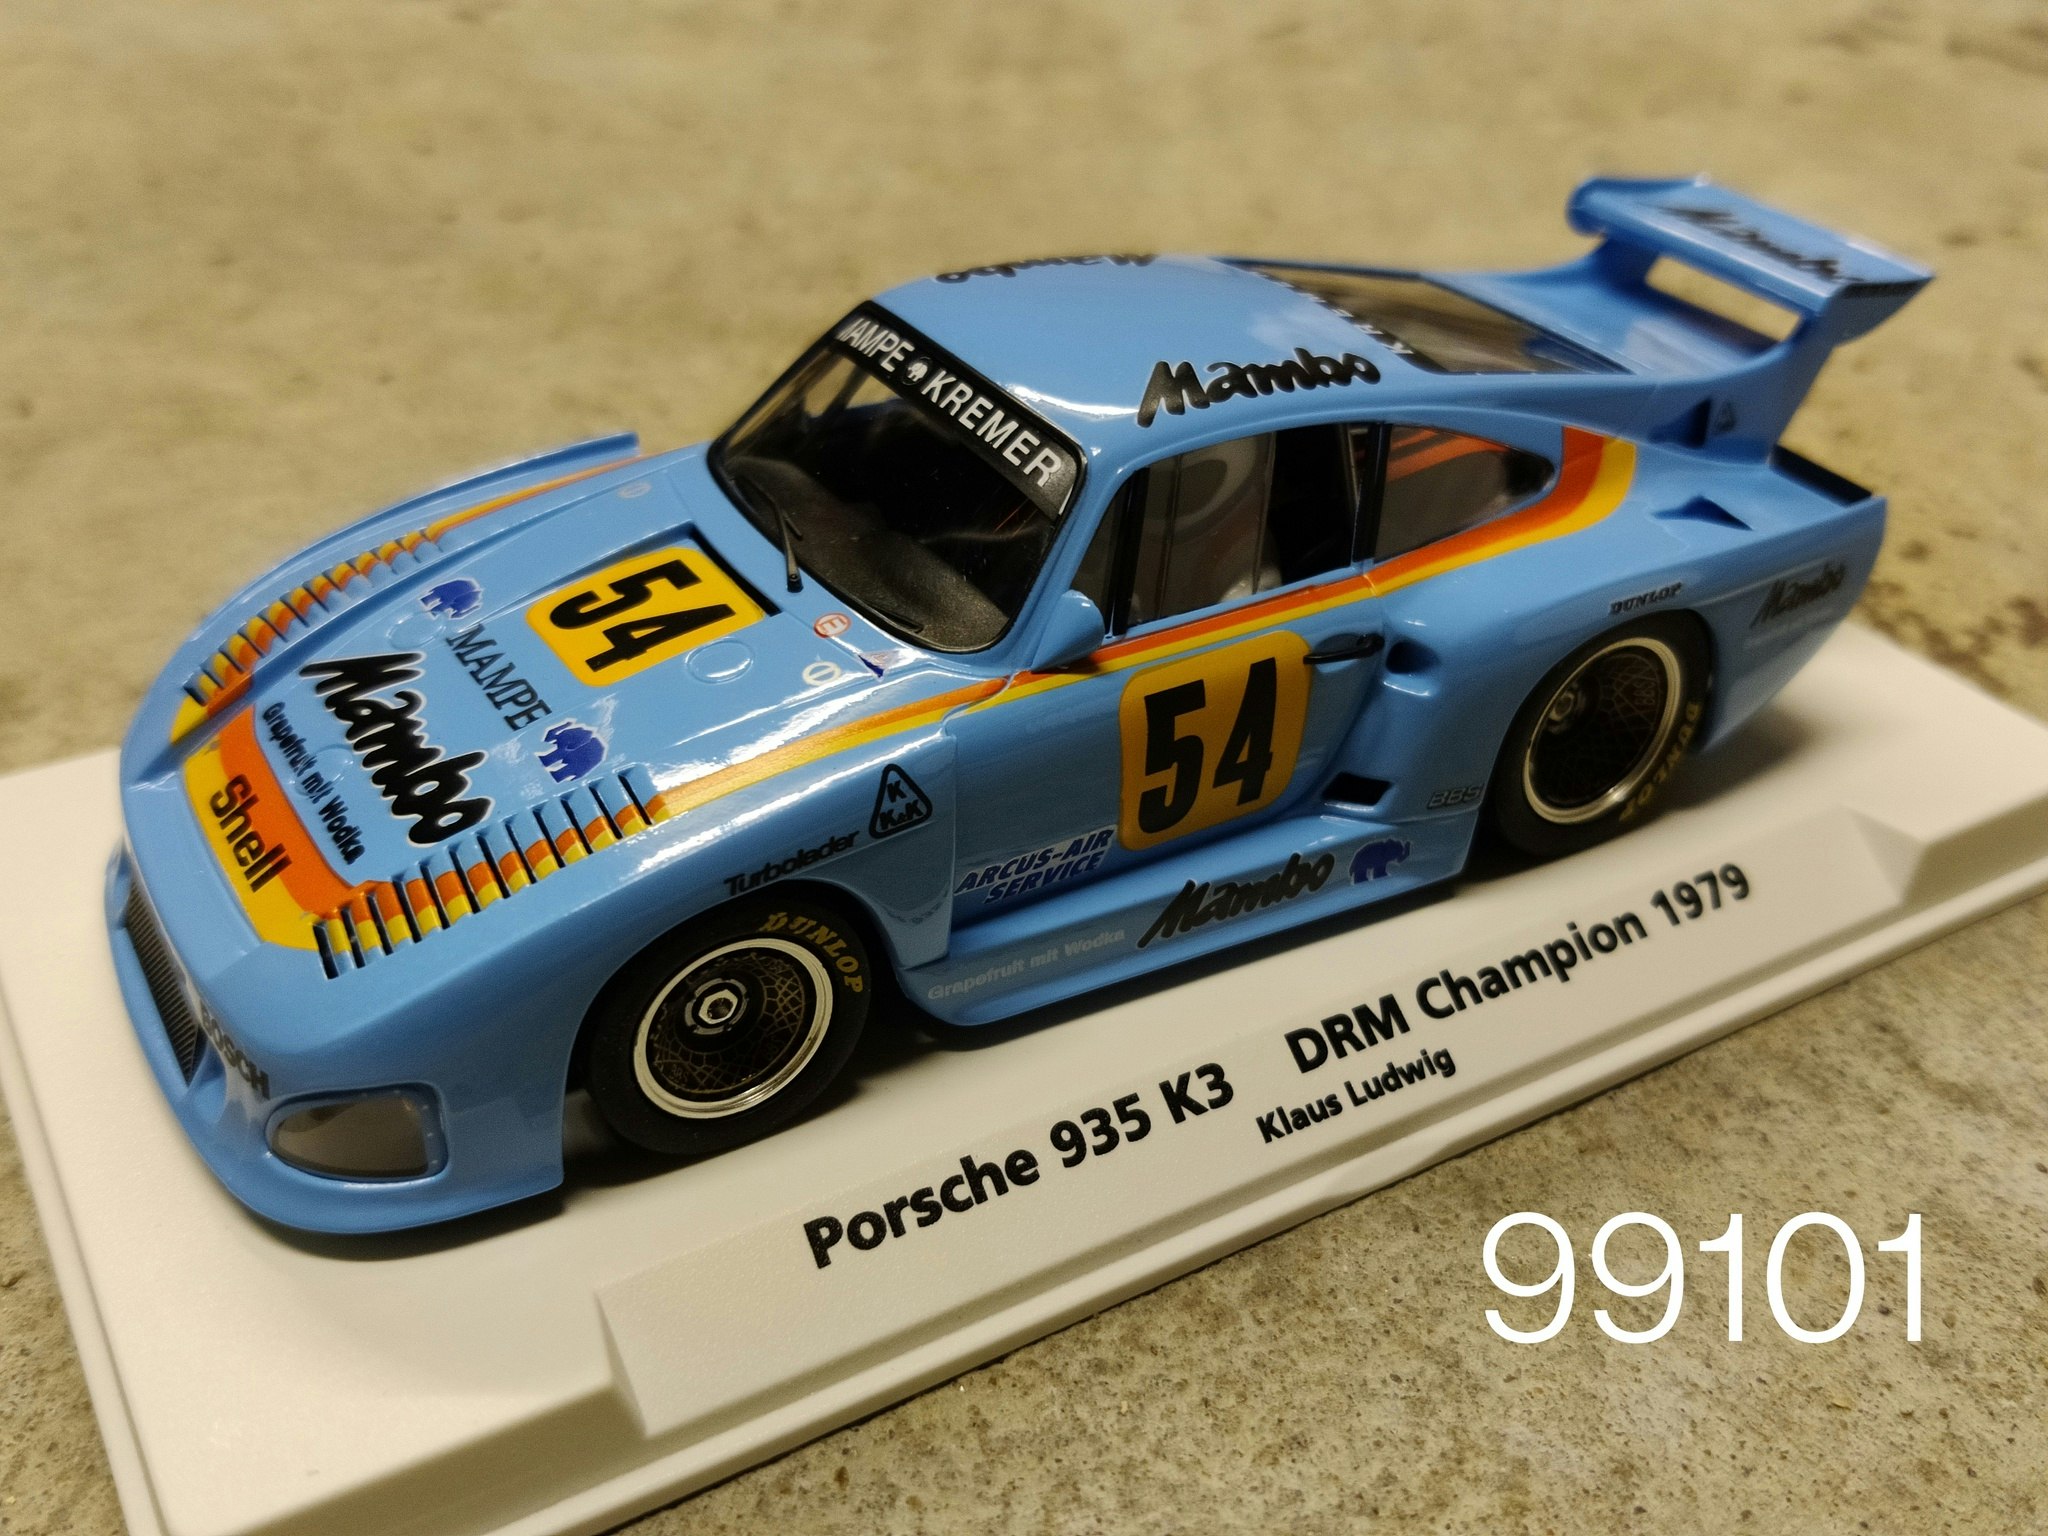 FLY Car Model - Porsche 935 K3 - DRM 1979 Champion - Klaus Ludwig